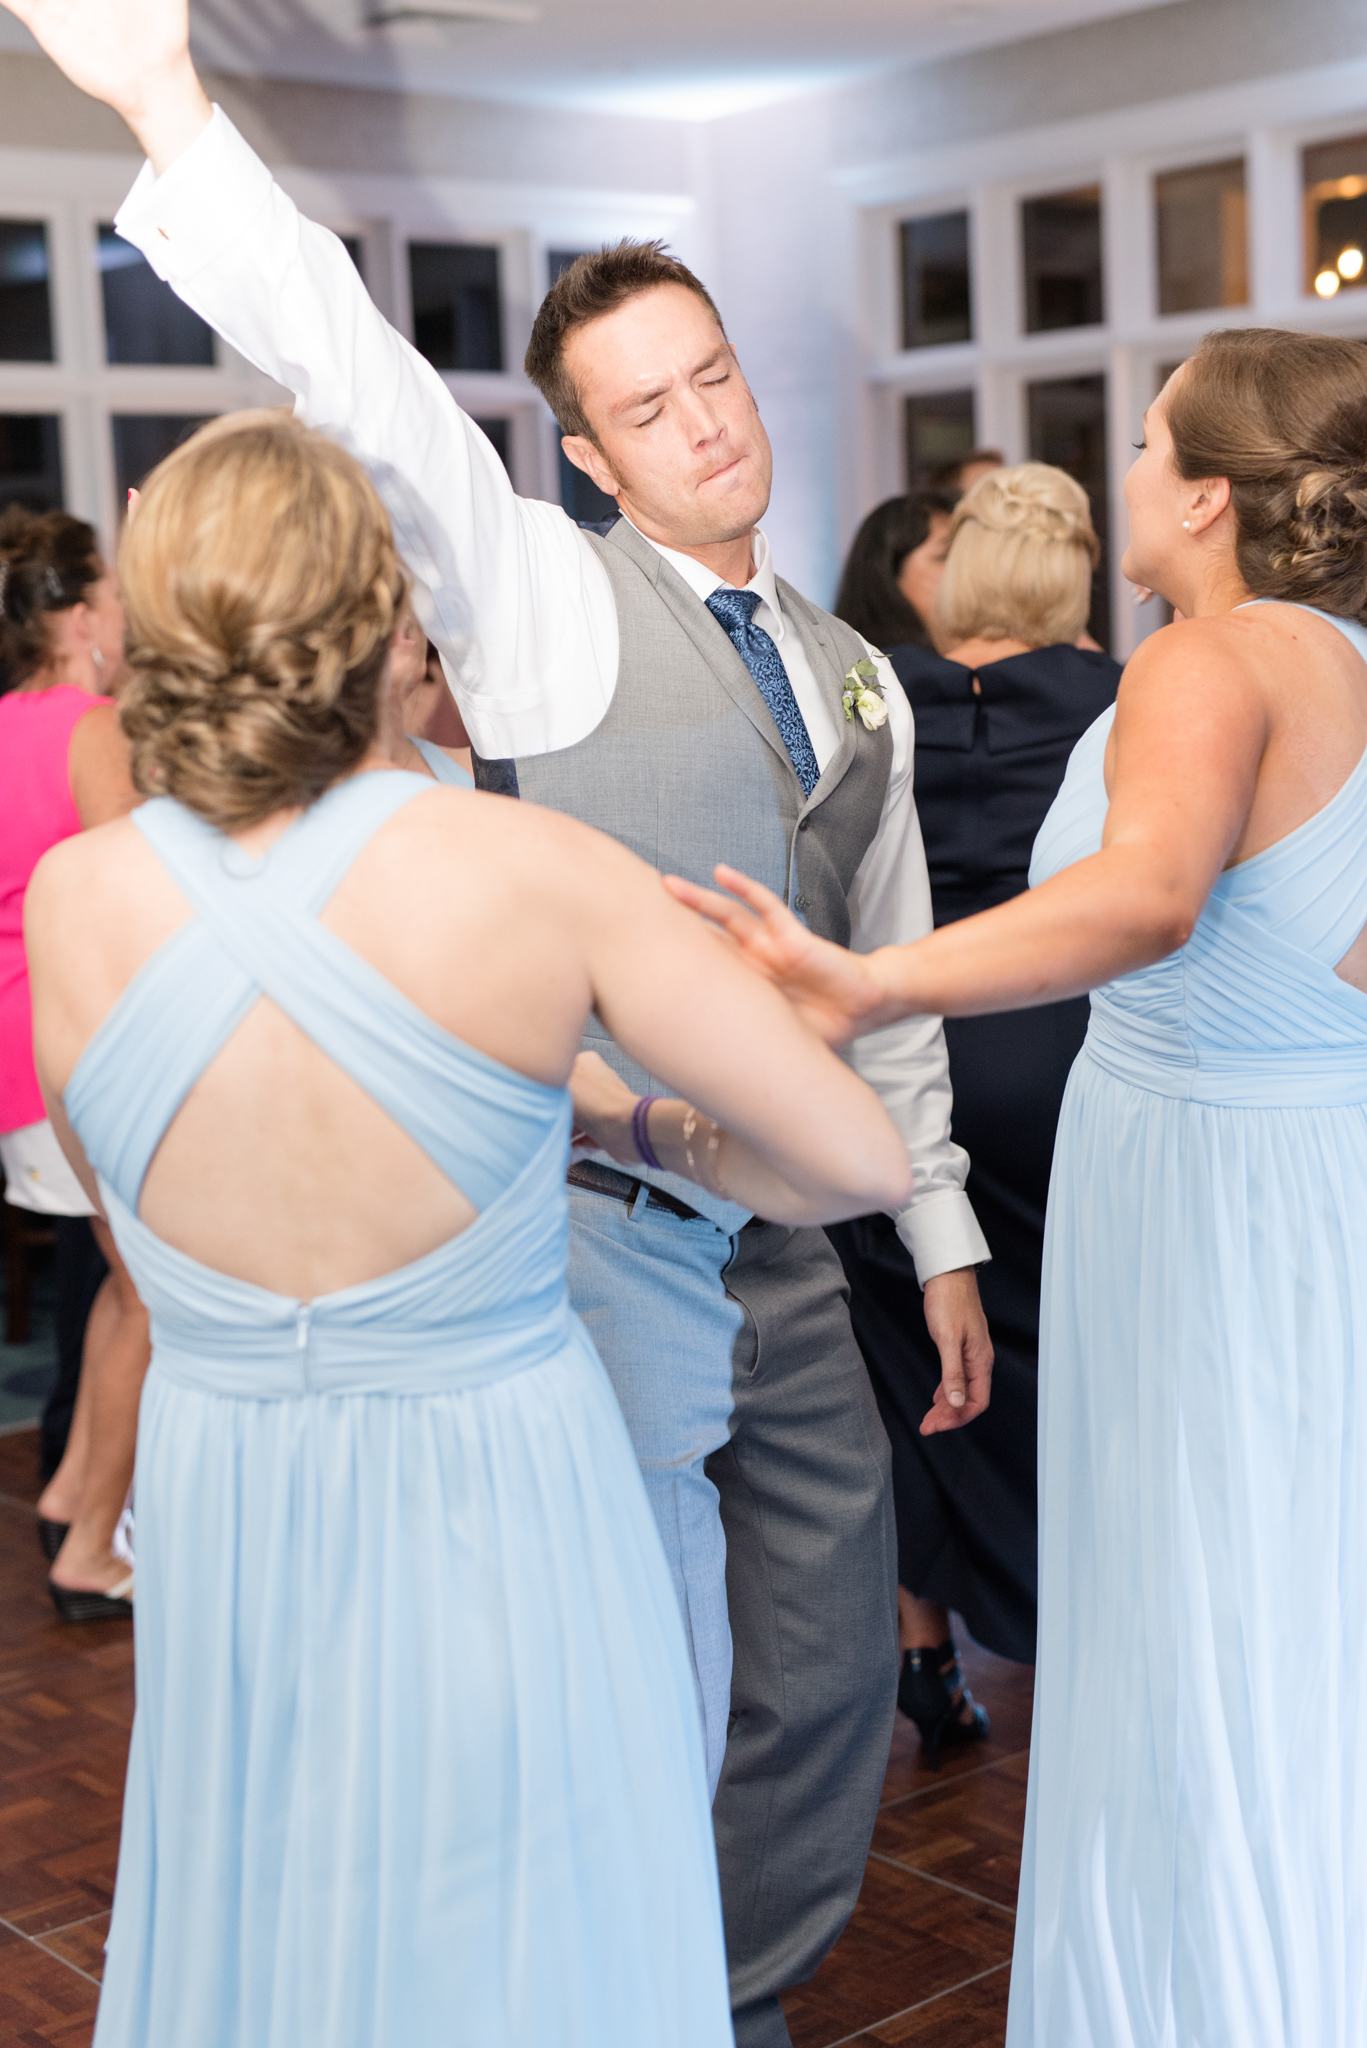 Groom dances at wedding reception.